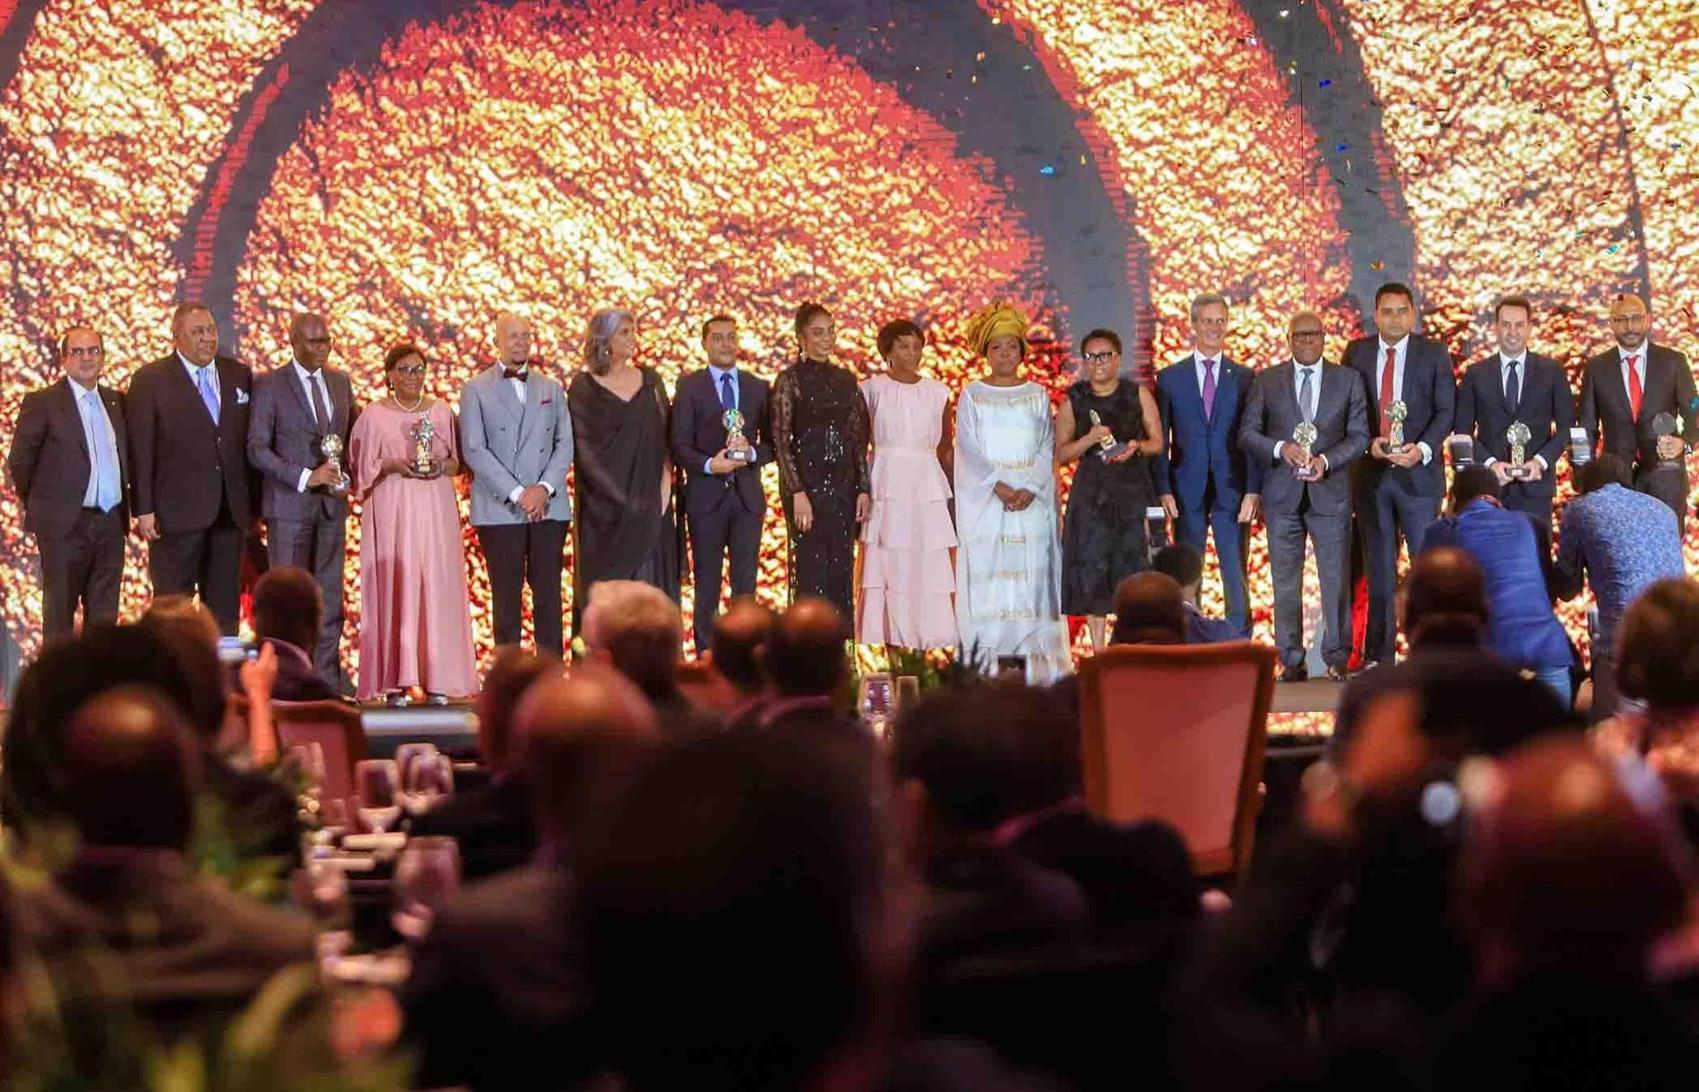 Grupo Carrinho wins two categories of the Sirius Awards